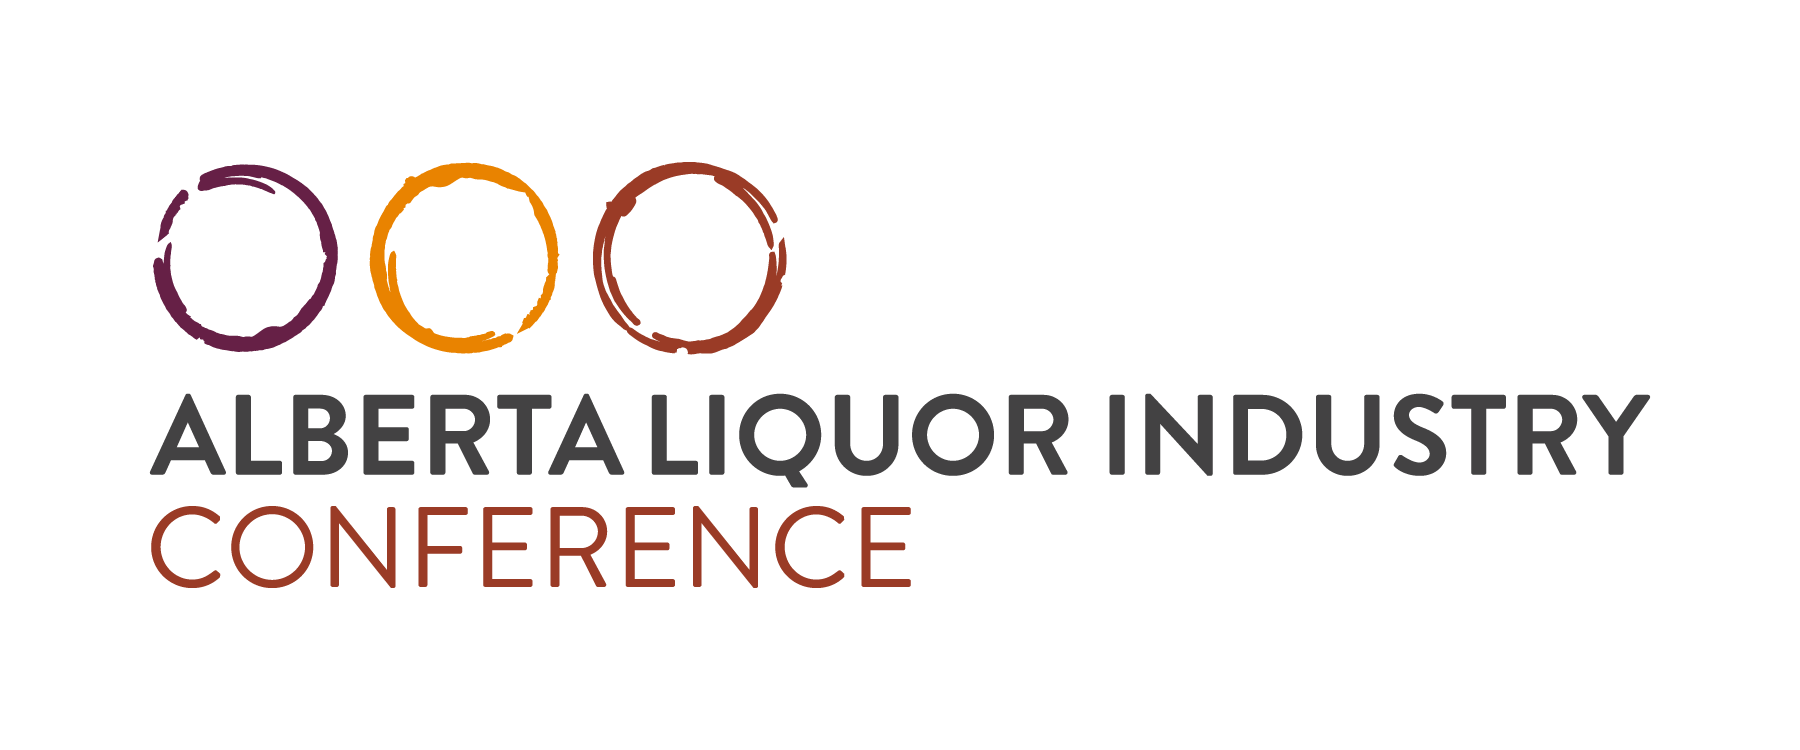 Alberta Liquor industry conference